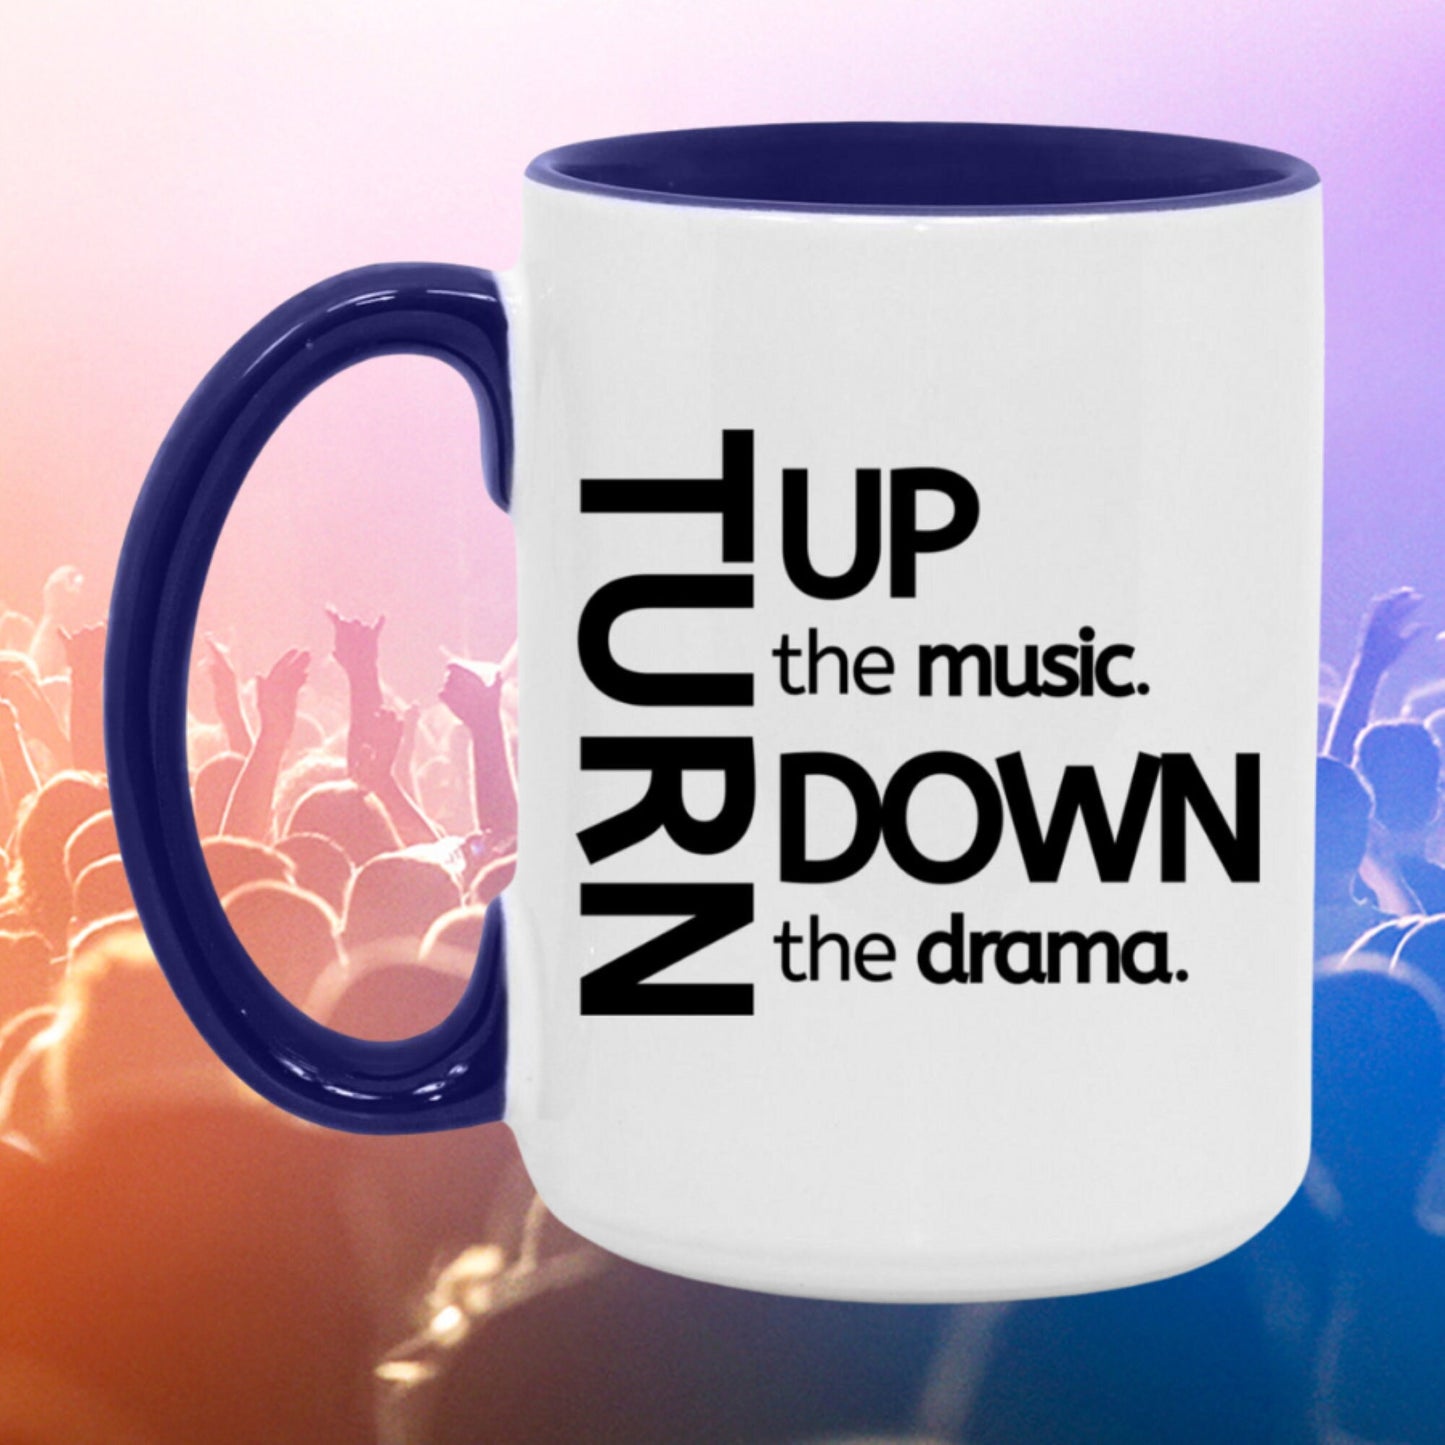 Turn Up The Music. Turn Down The Drama. Mug